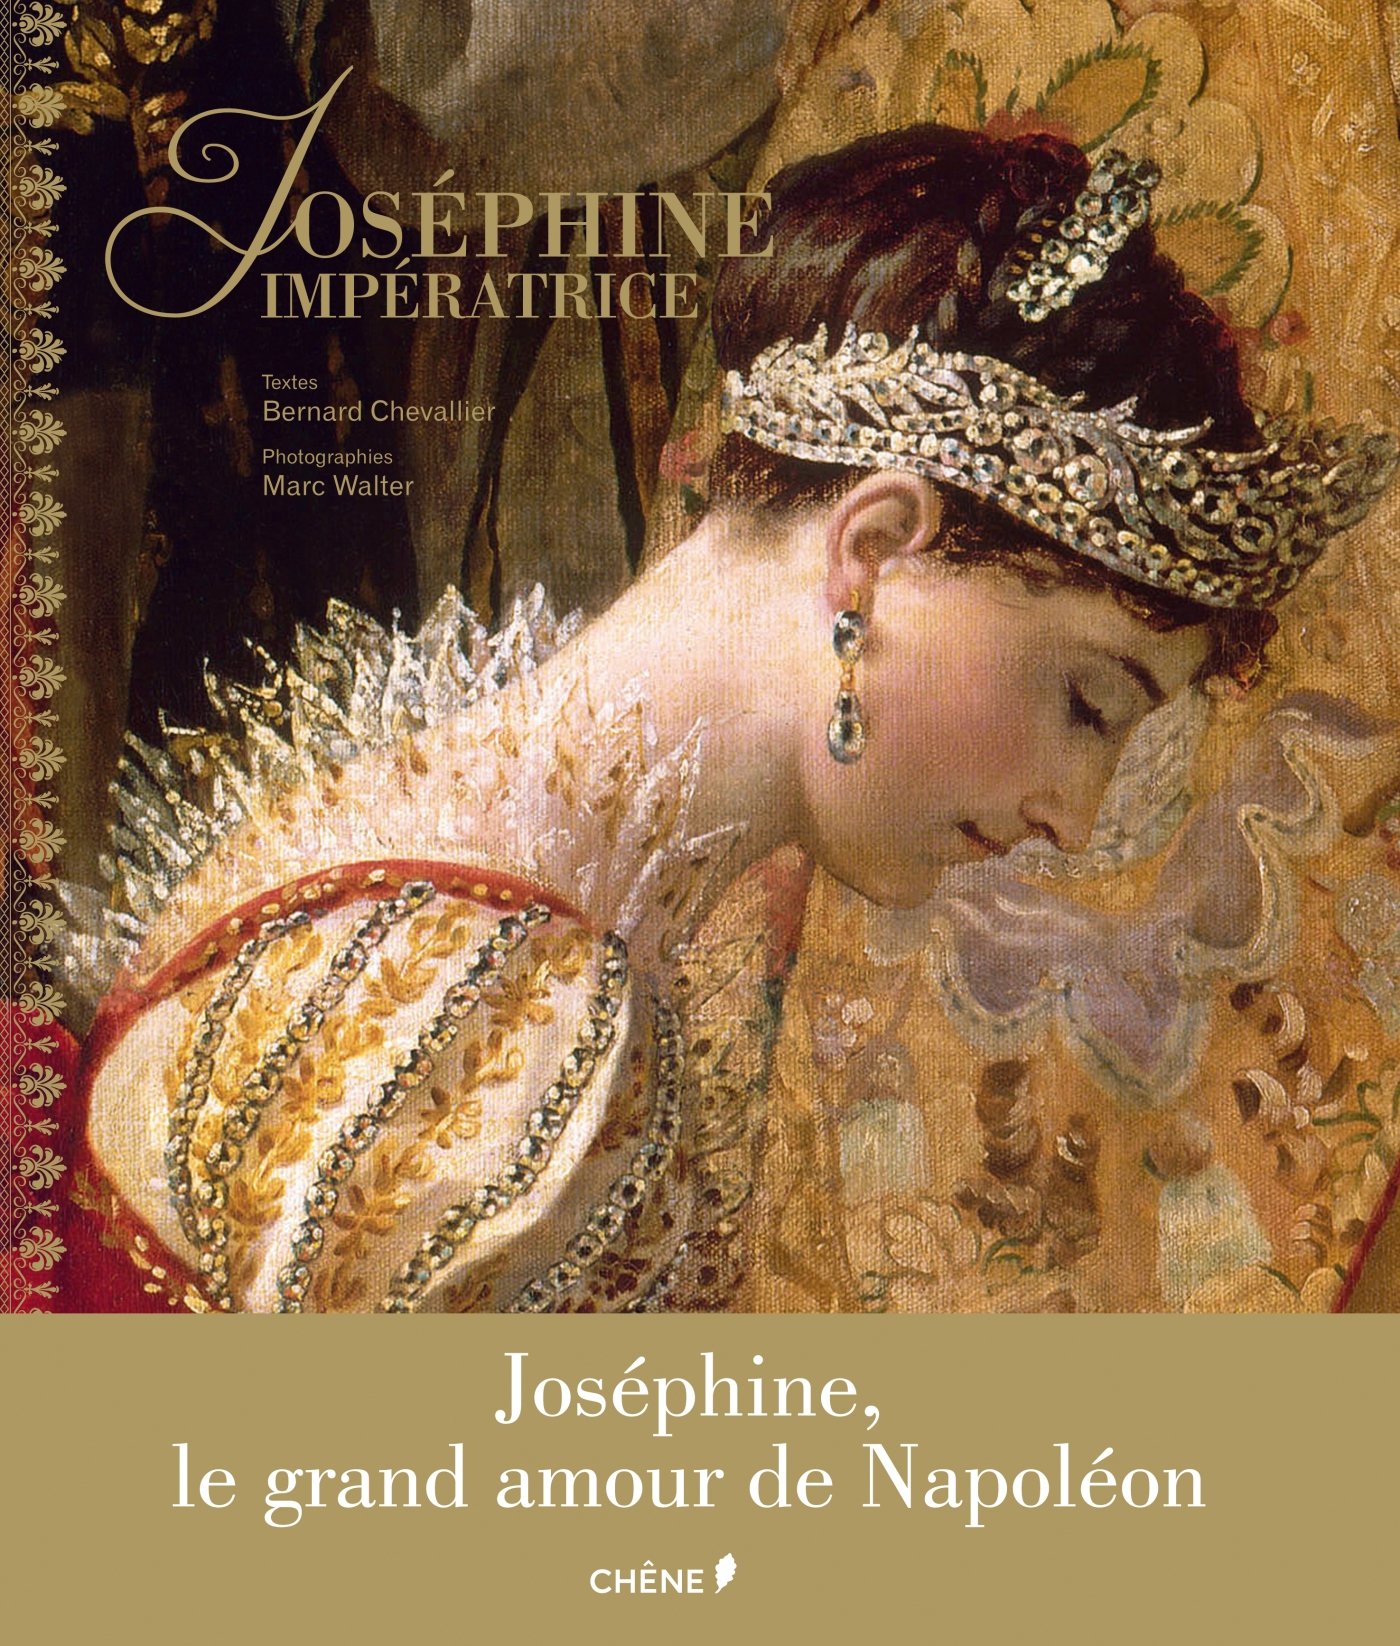 Joséphine impératrice, Bernard Chevallier, éditions du Chêne